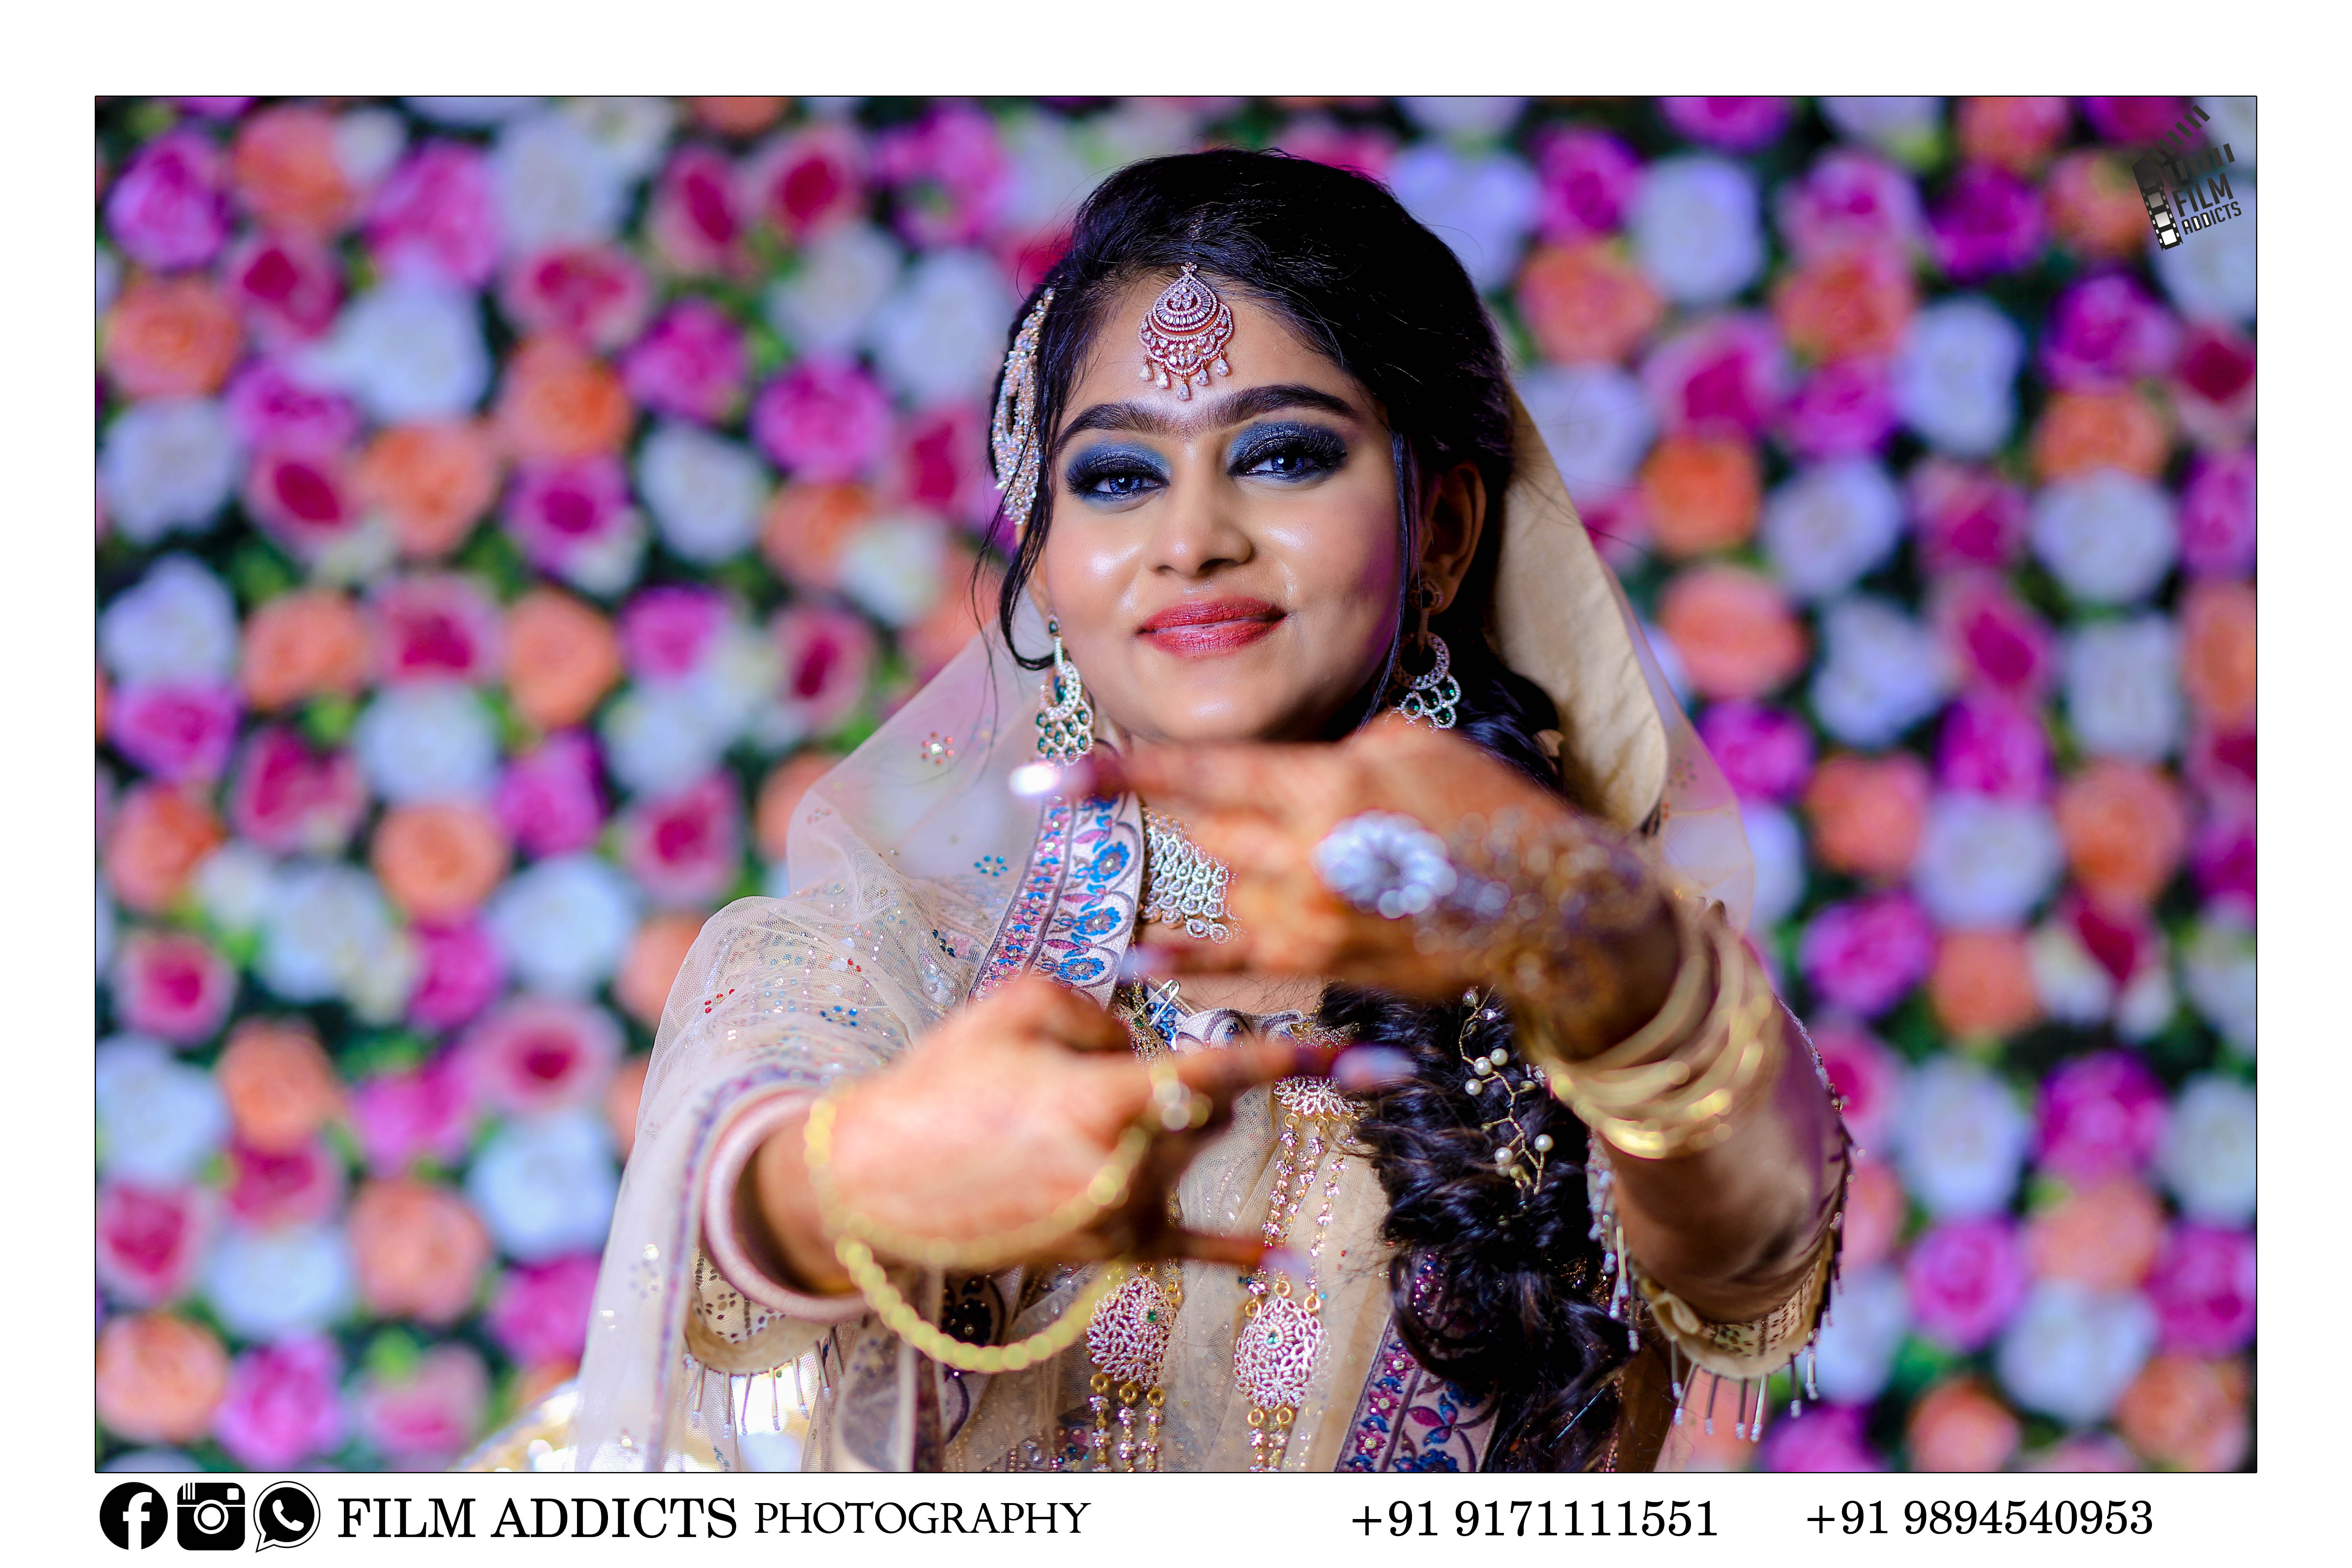 Best Indian Wedding Mehndi Ceremony Poses every Bride-to-be should Bookmark  - Fine Art  Productionhttps://static.wixstatic.com/media/cc1936_4e6682aab57e4571bc27939344e20b51~mv2.jpg/v1/fill/w_1000,h_667,al_c,q_85,usm_0.66_1.00_0.01  ...